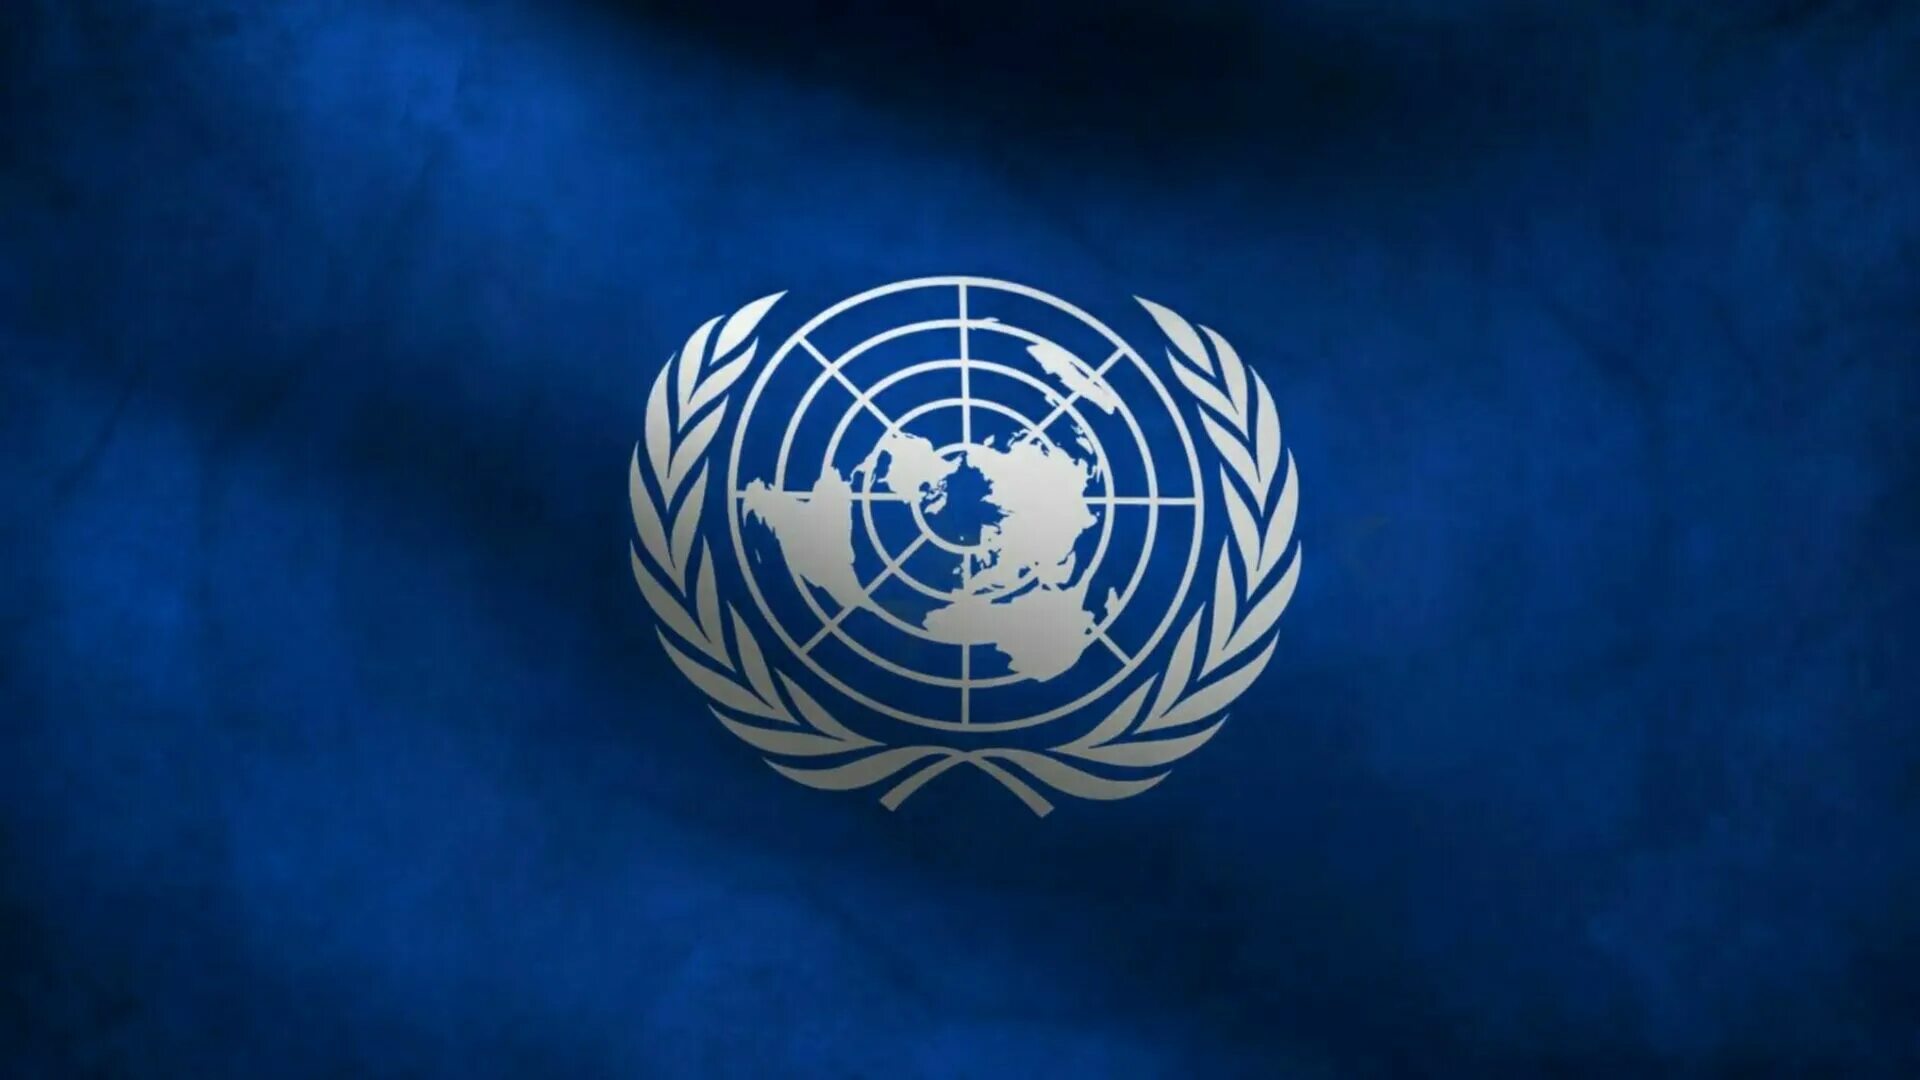 Организация Объединенных наций (ООН). Флаг ООН. Организация Объединенных наций ООН флаг. Совет безопасности ООН флаг. Организации оон в сша